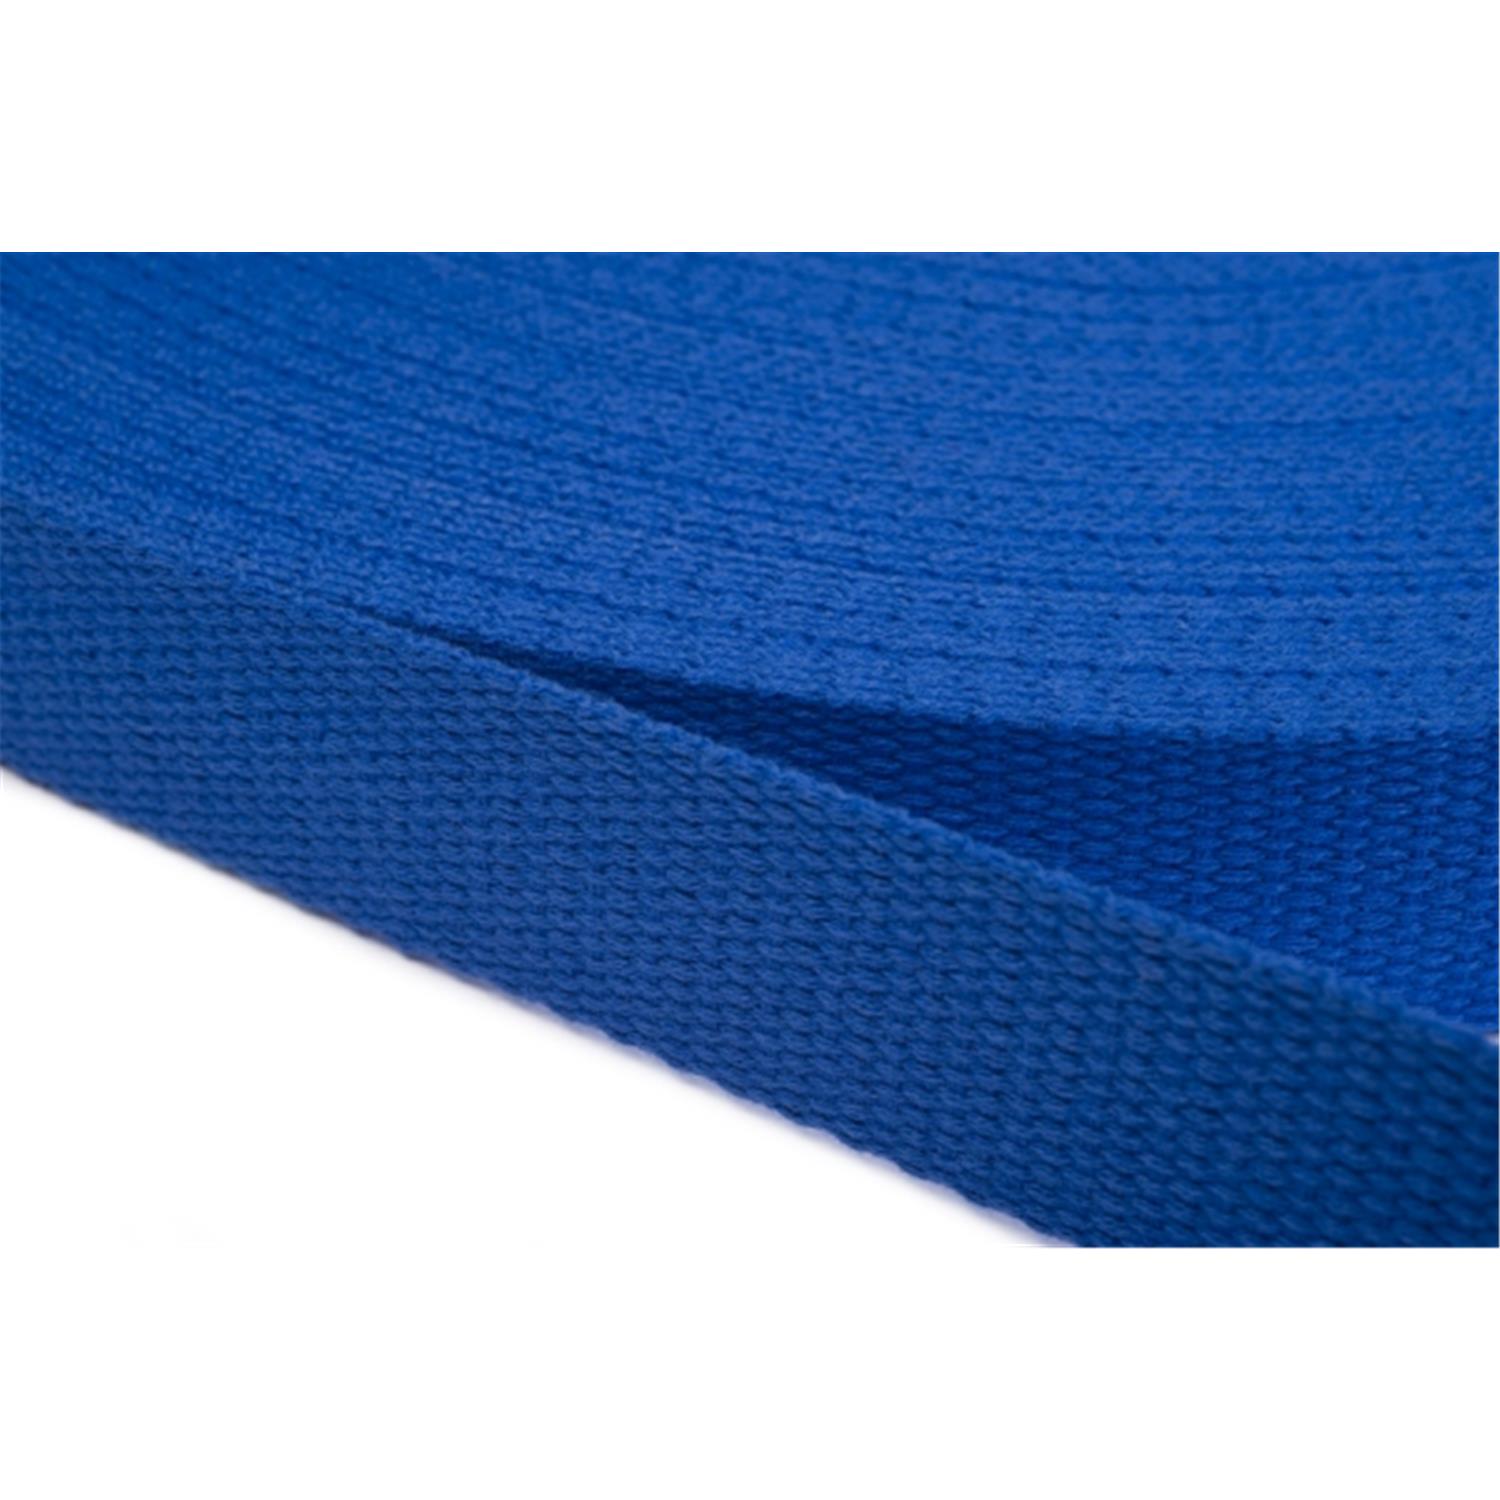 Gurtband aus Baumwolle 50mm in 20 Farben 12 - royalblau 6 Meter